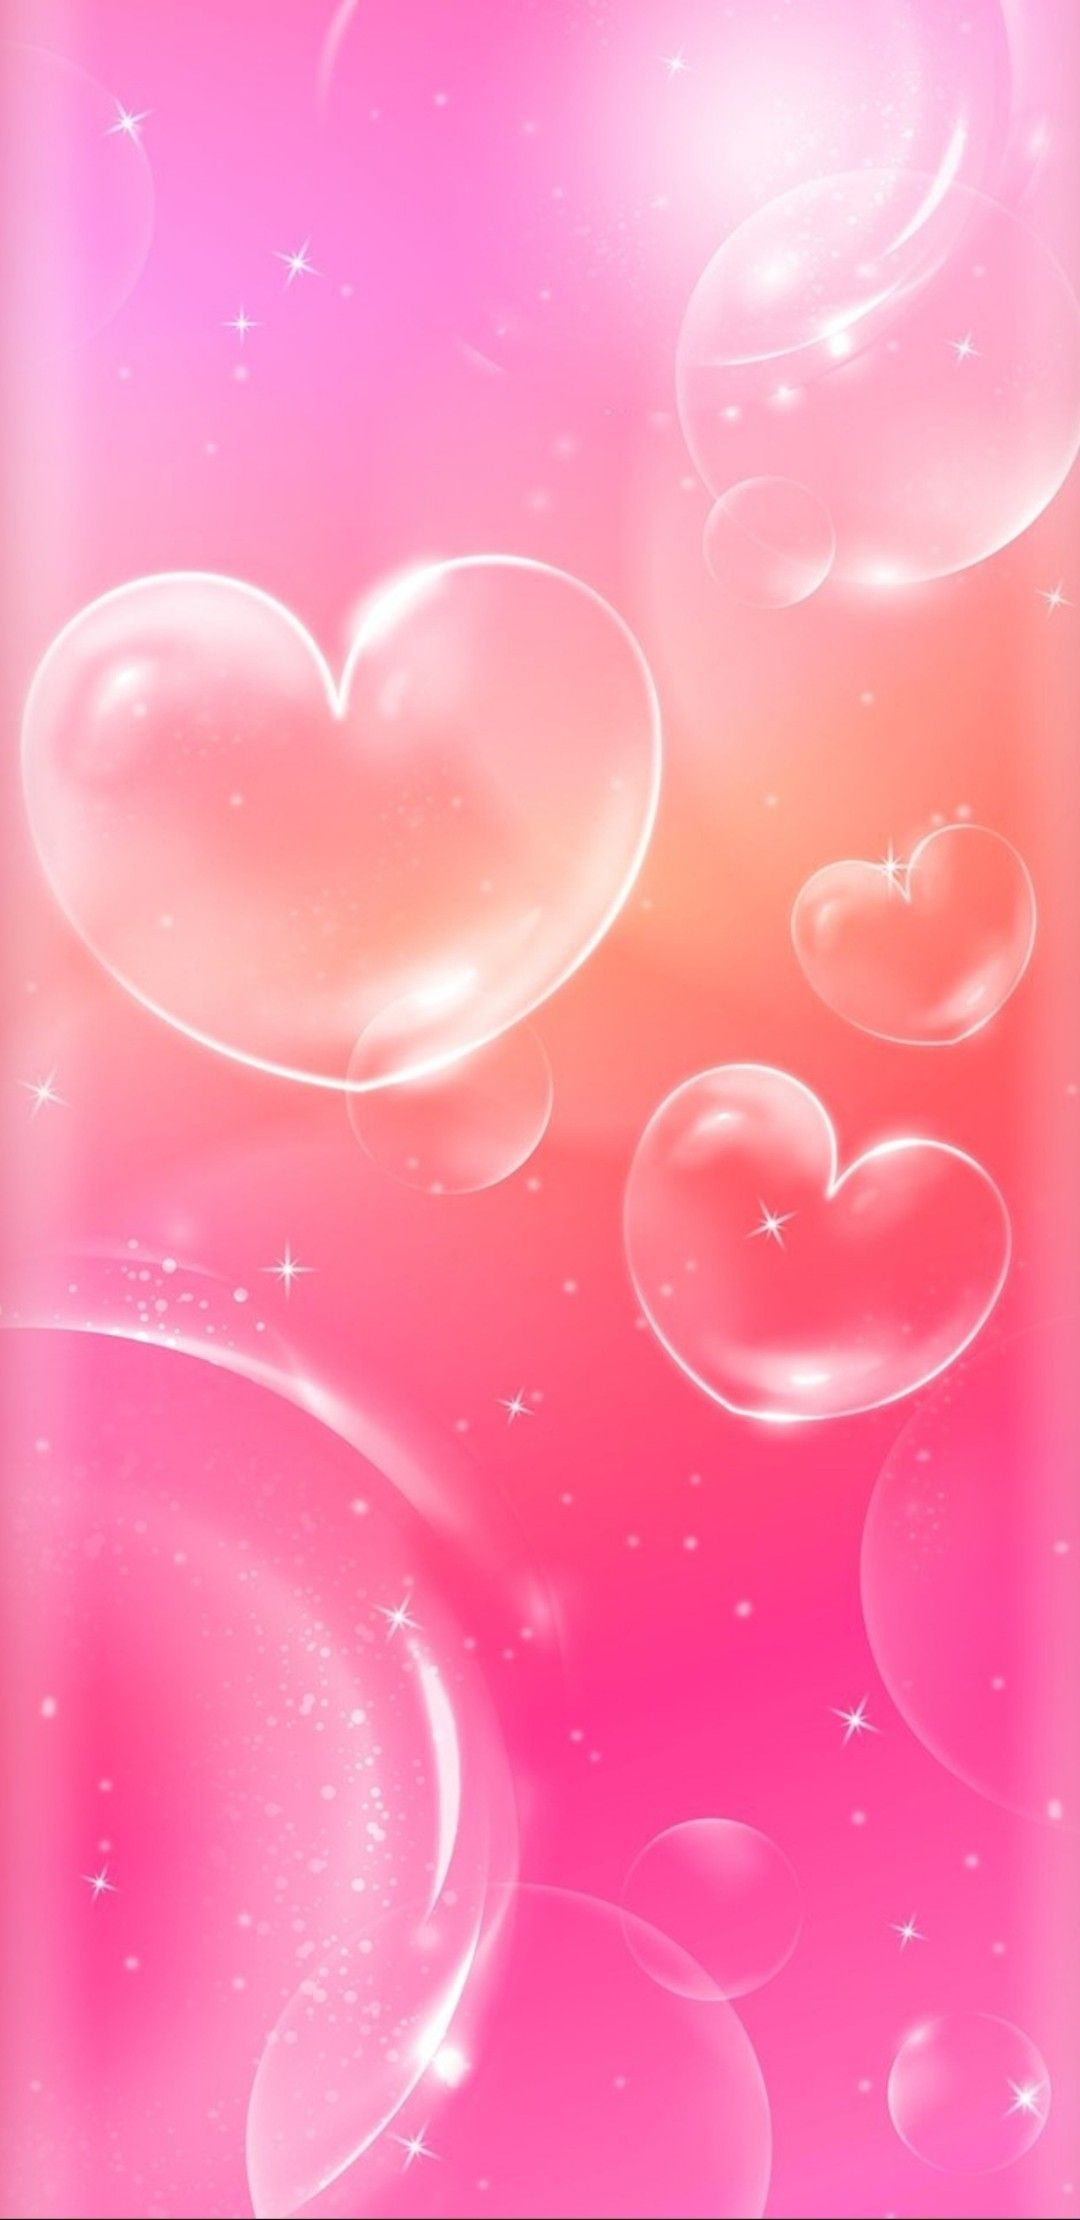 Wallpaper.By Artist Unknown. Heart wallpaper, Bubbles wallpaper, Valentines wallpaper